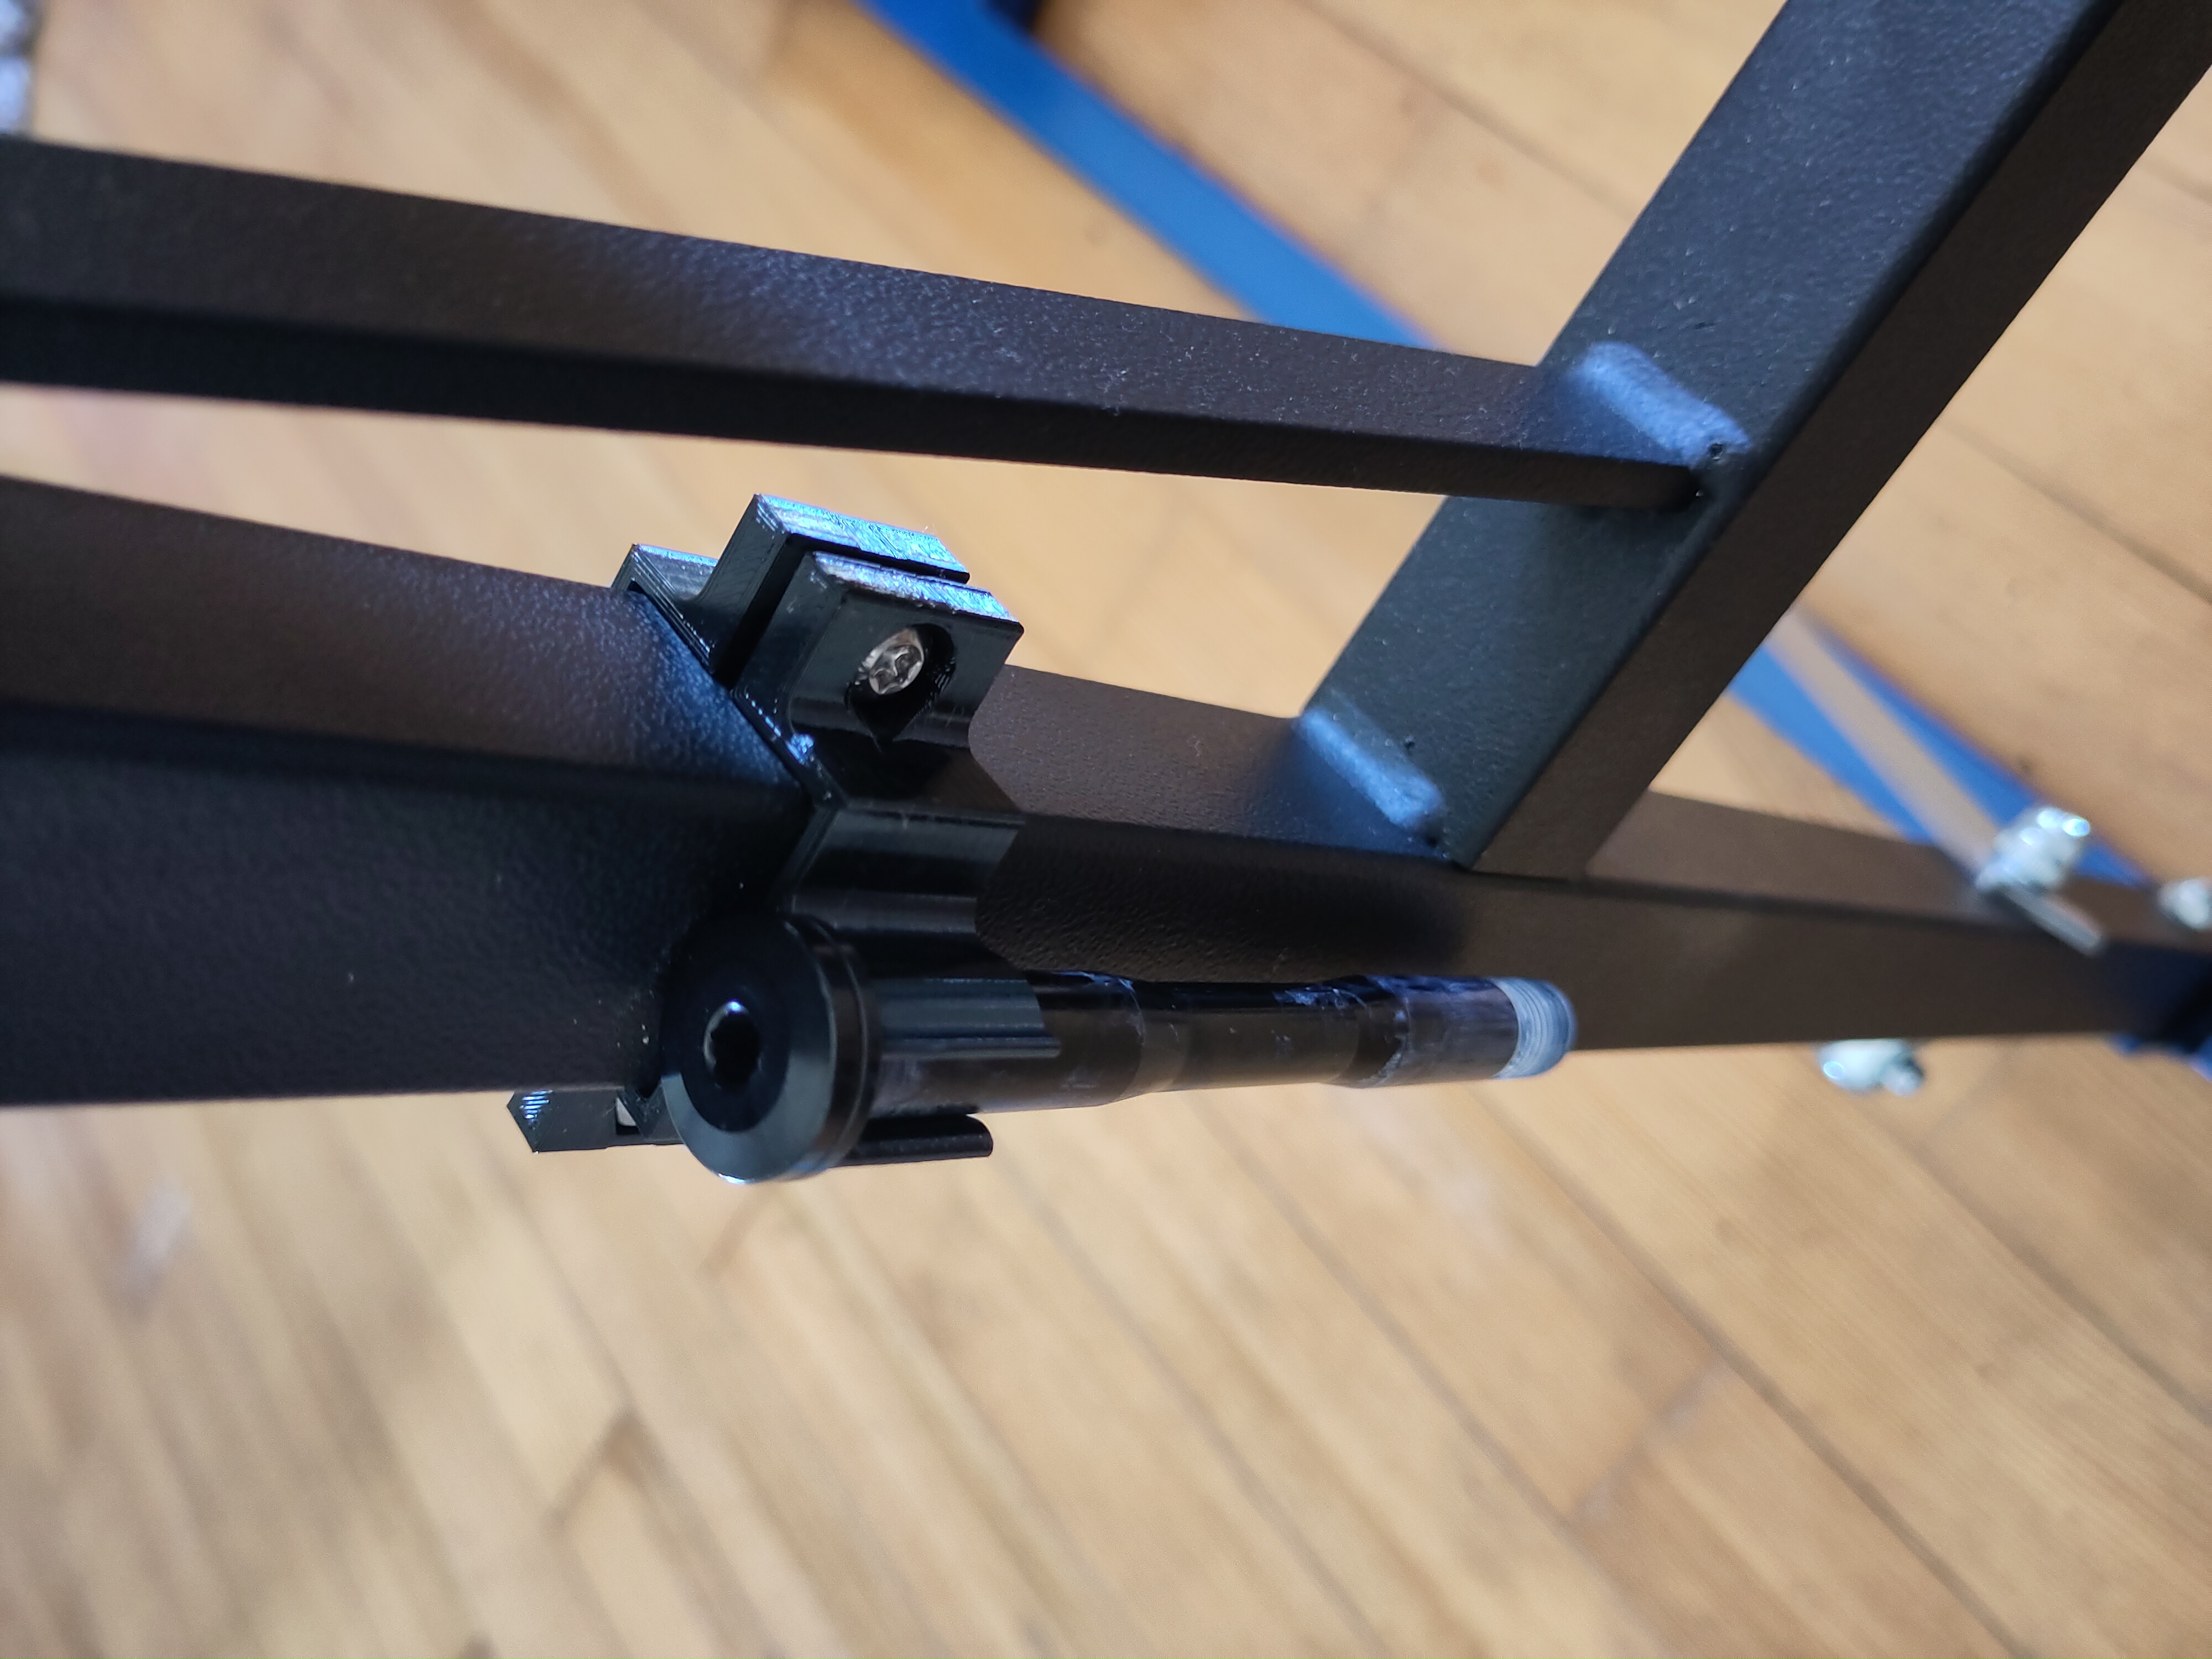 Thru-axle holder for bike repair stand